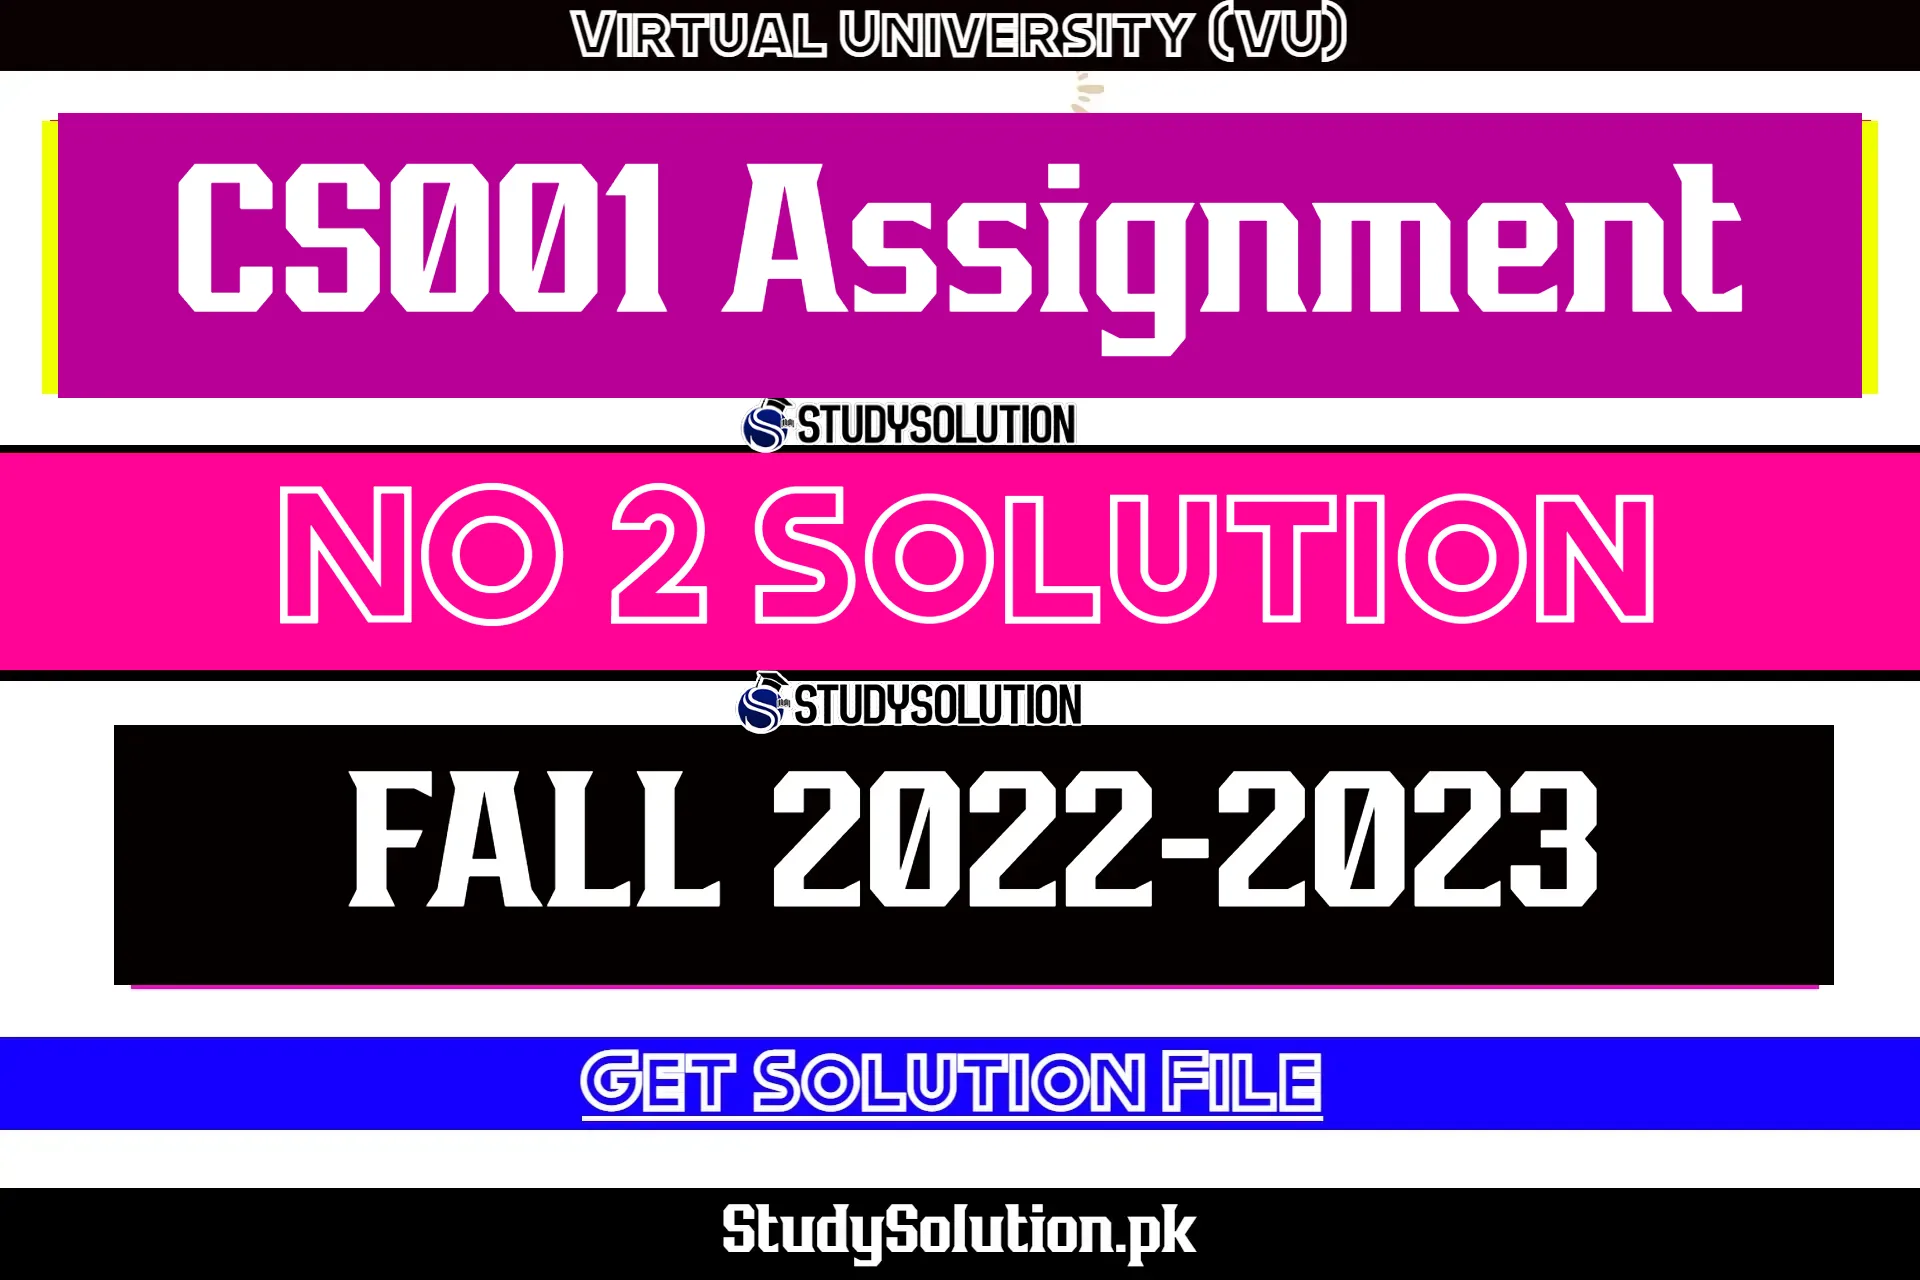 CS001 Assignment No 2 Solution Fall 2022